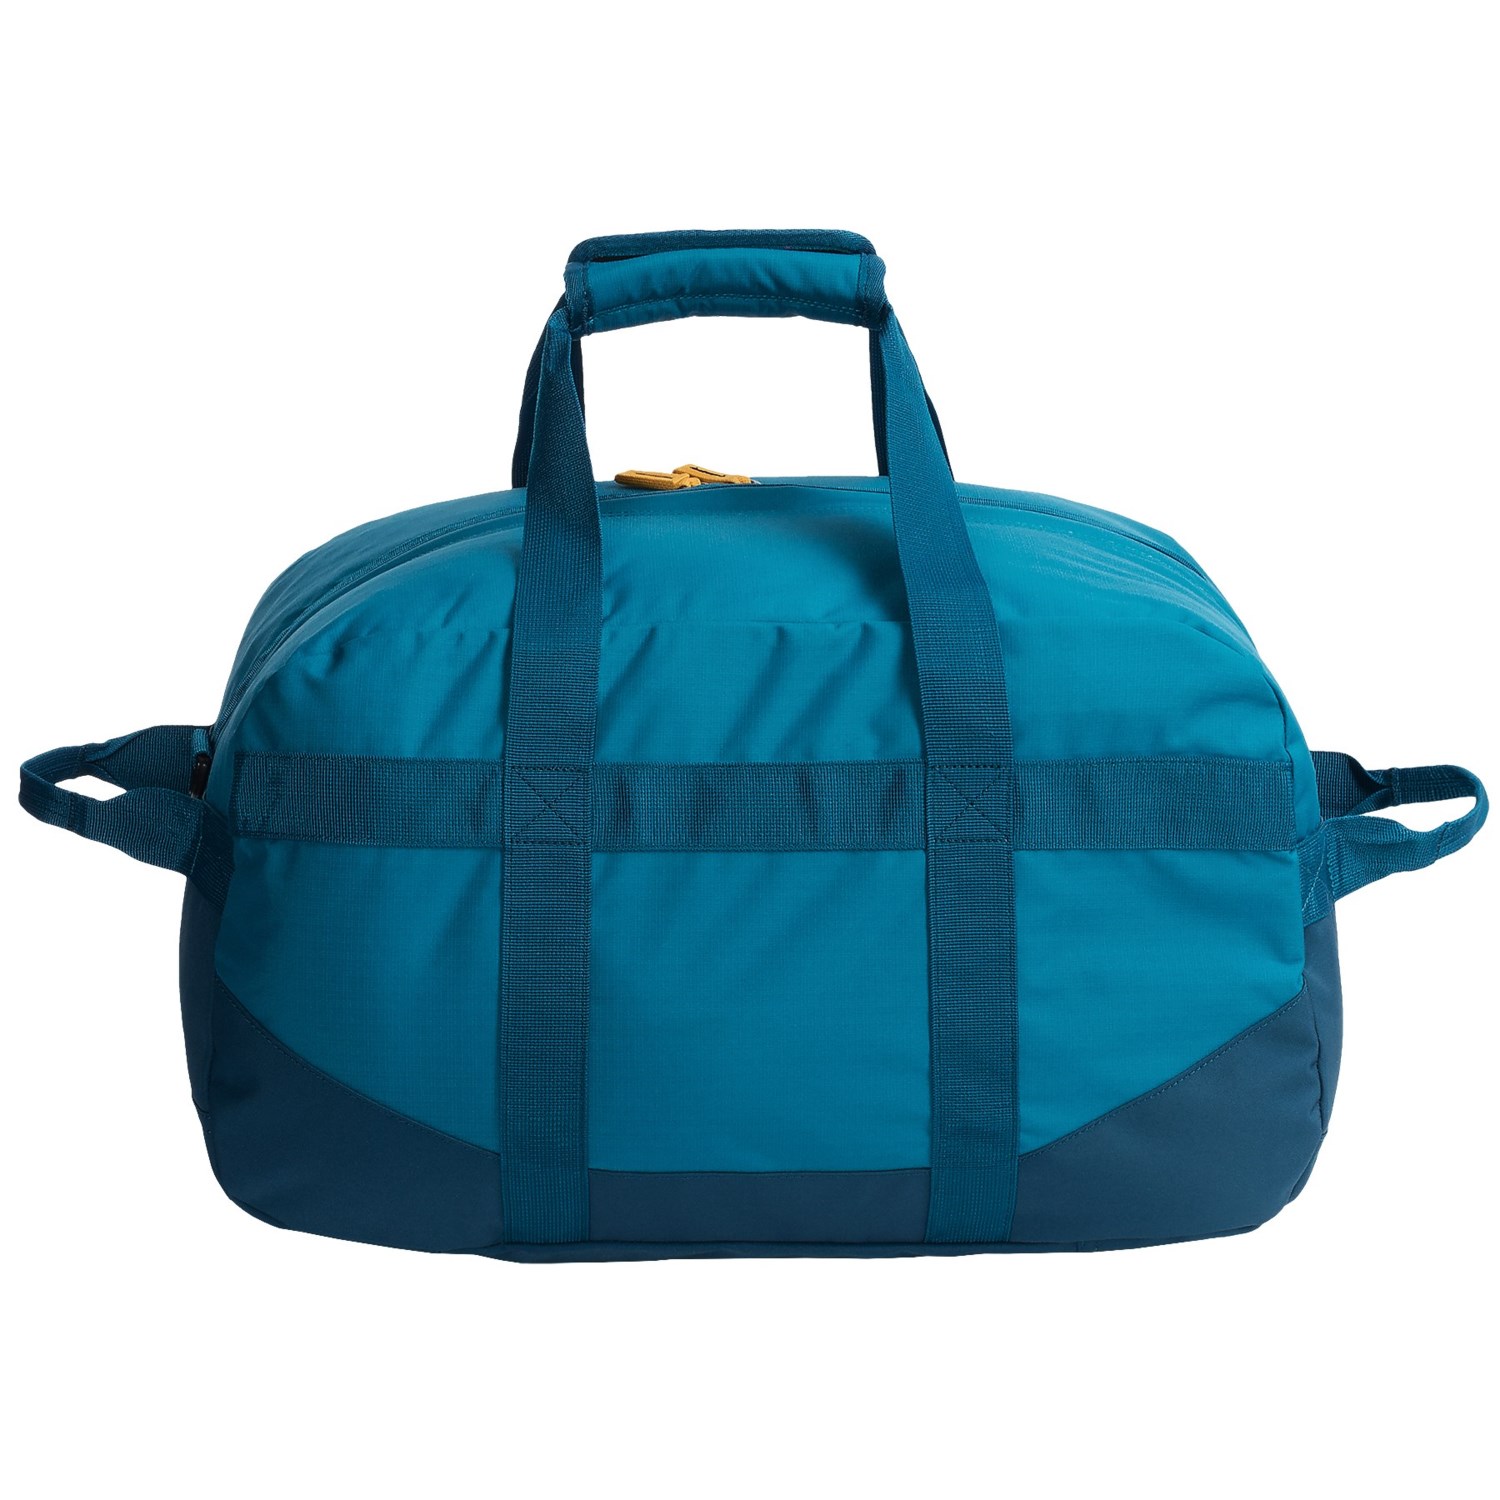 Mountainsmith Travel Duffel Bag - Medium - Save 49%